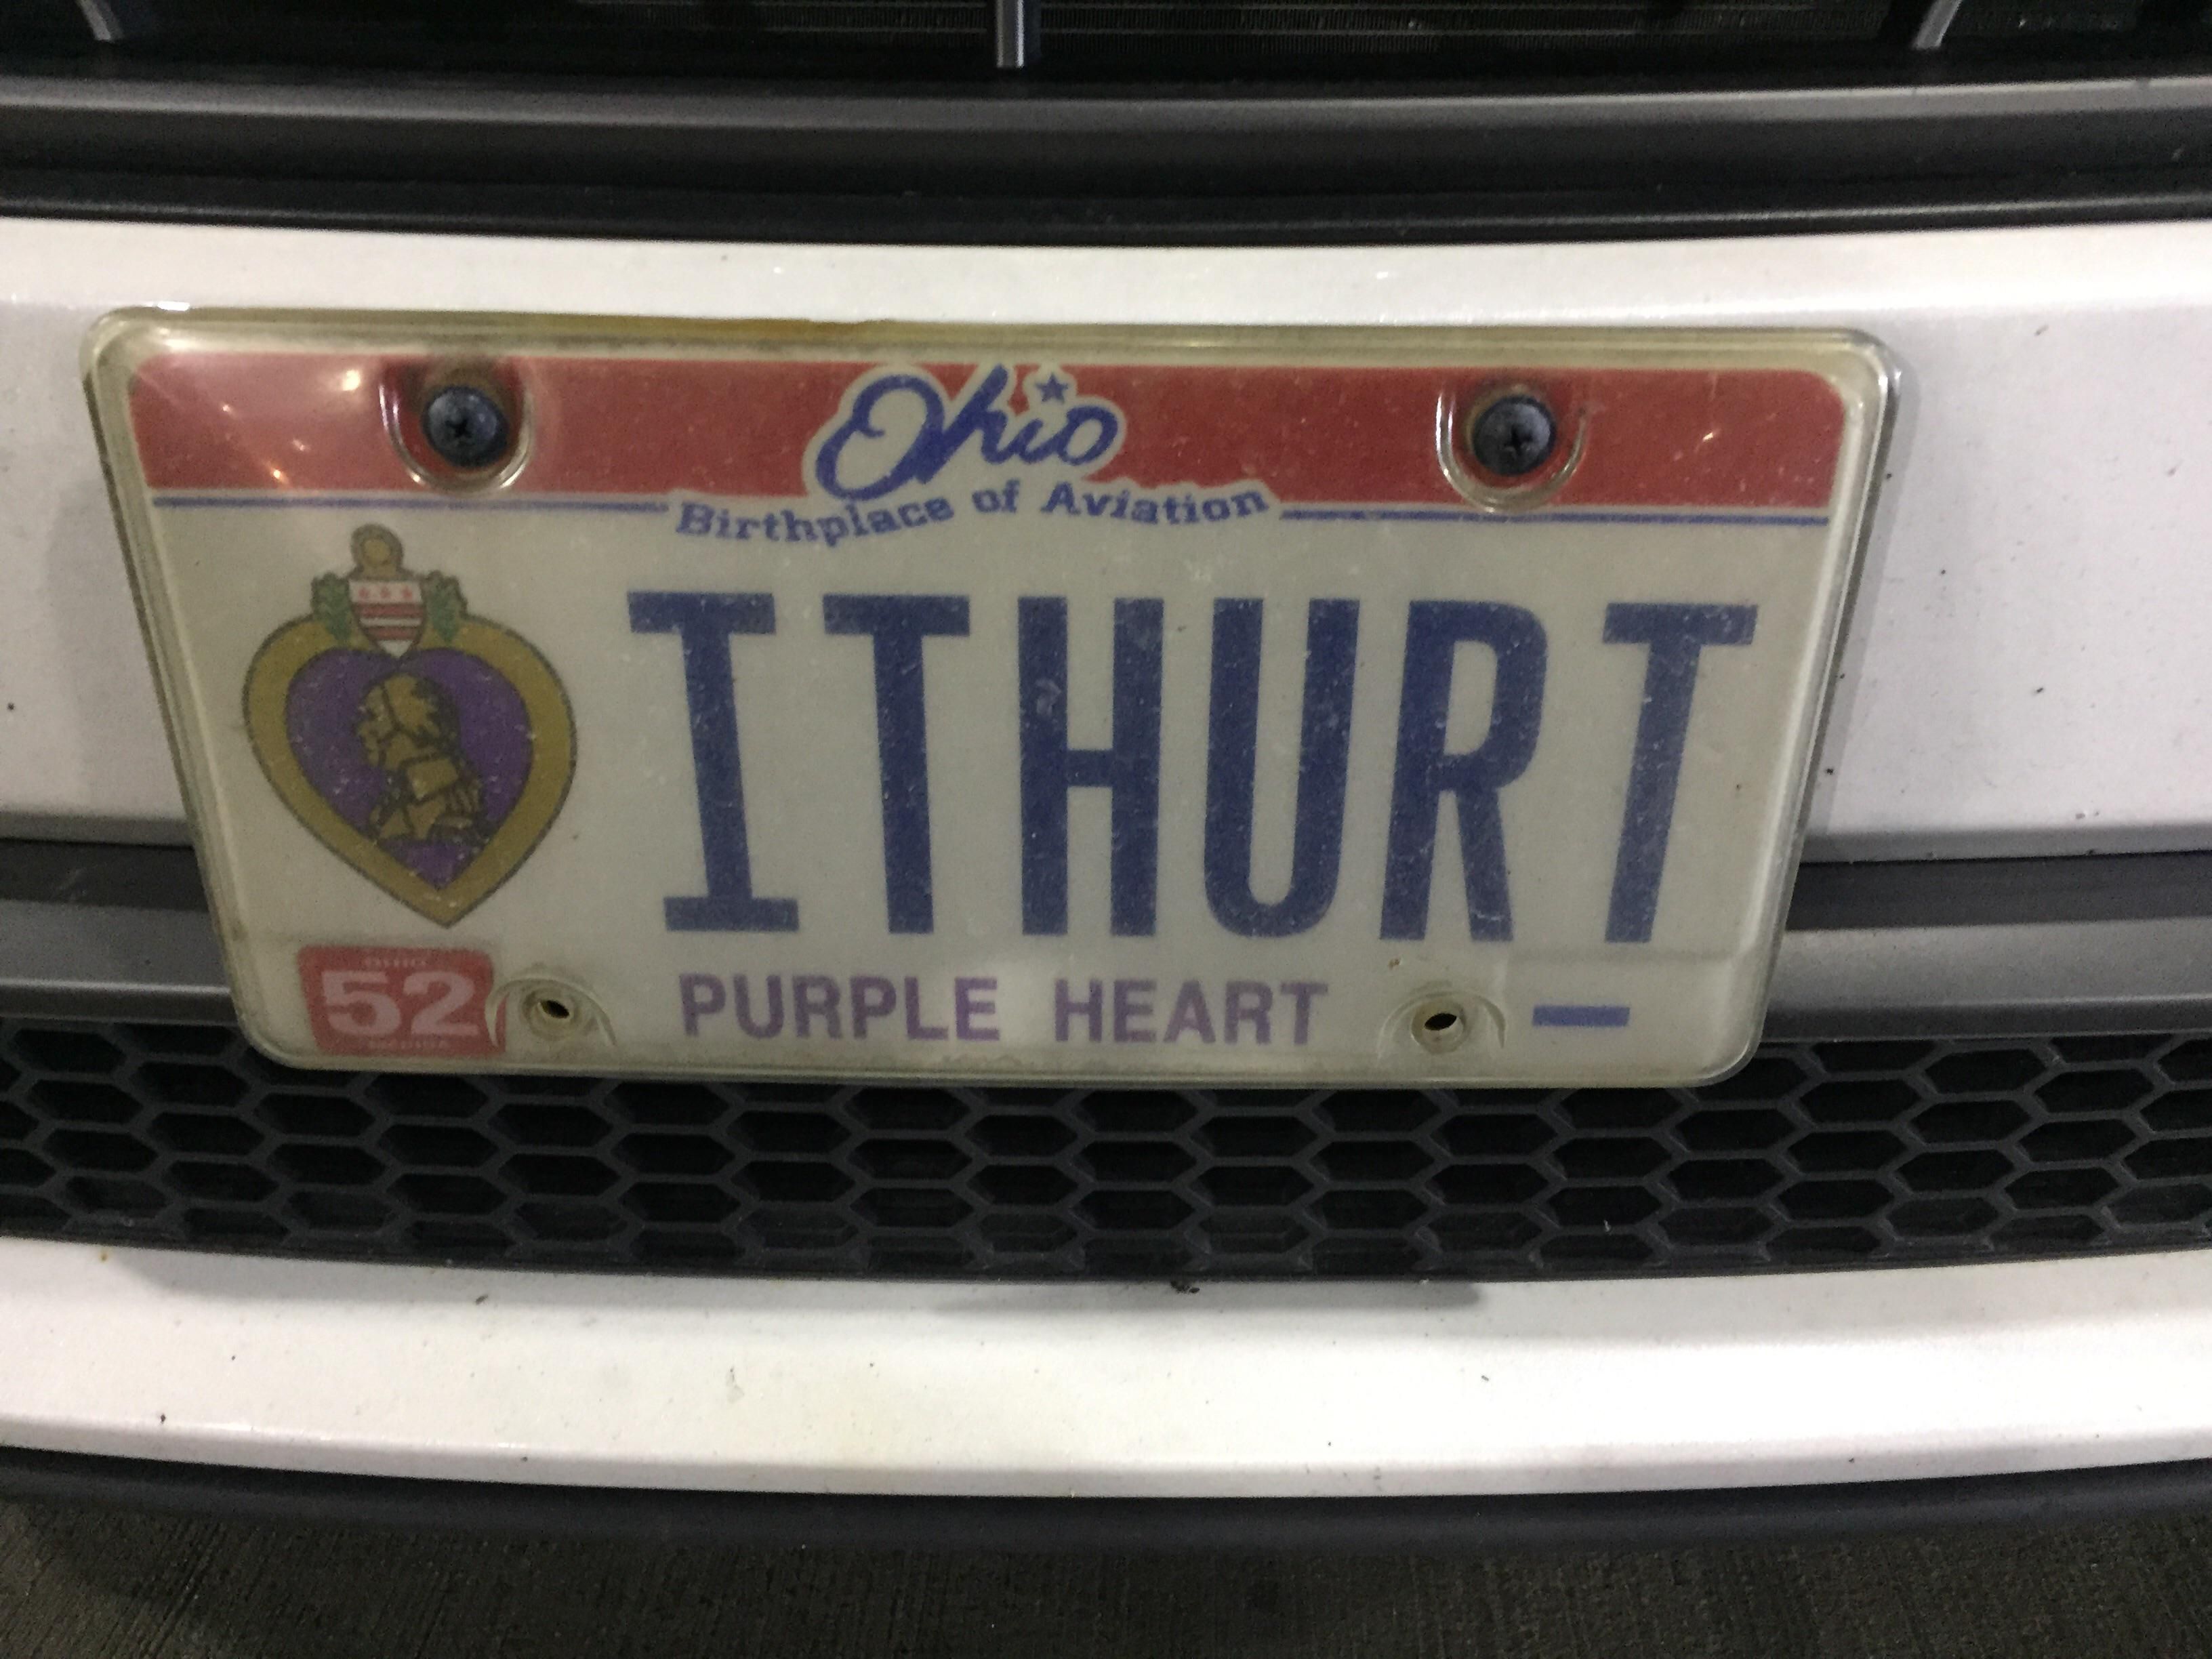 Hey, Purple Heart recipient, how’d it feel?